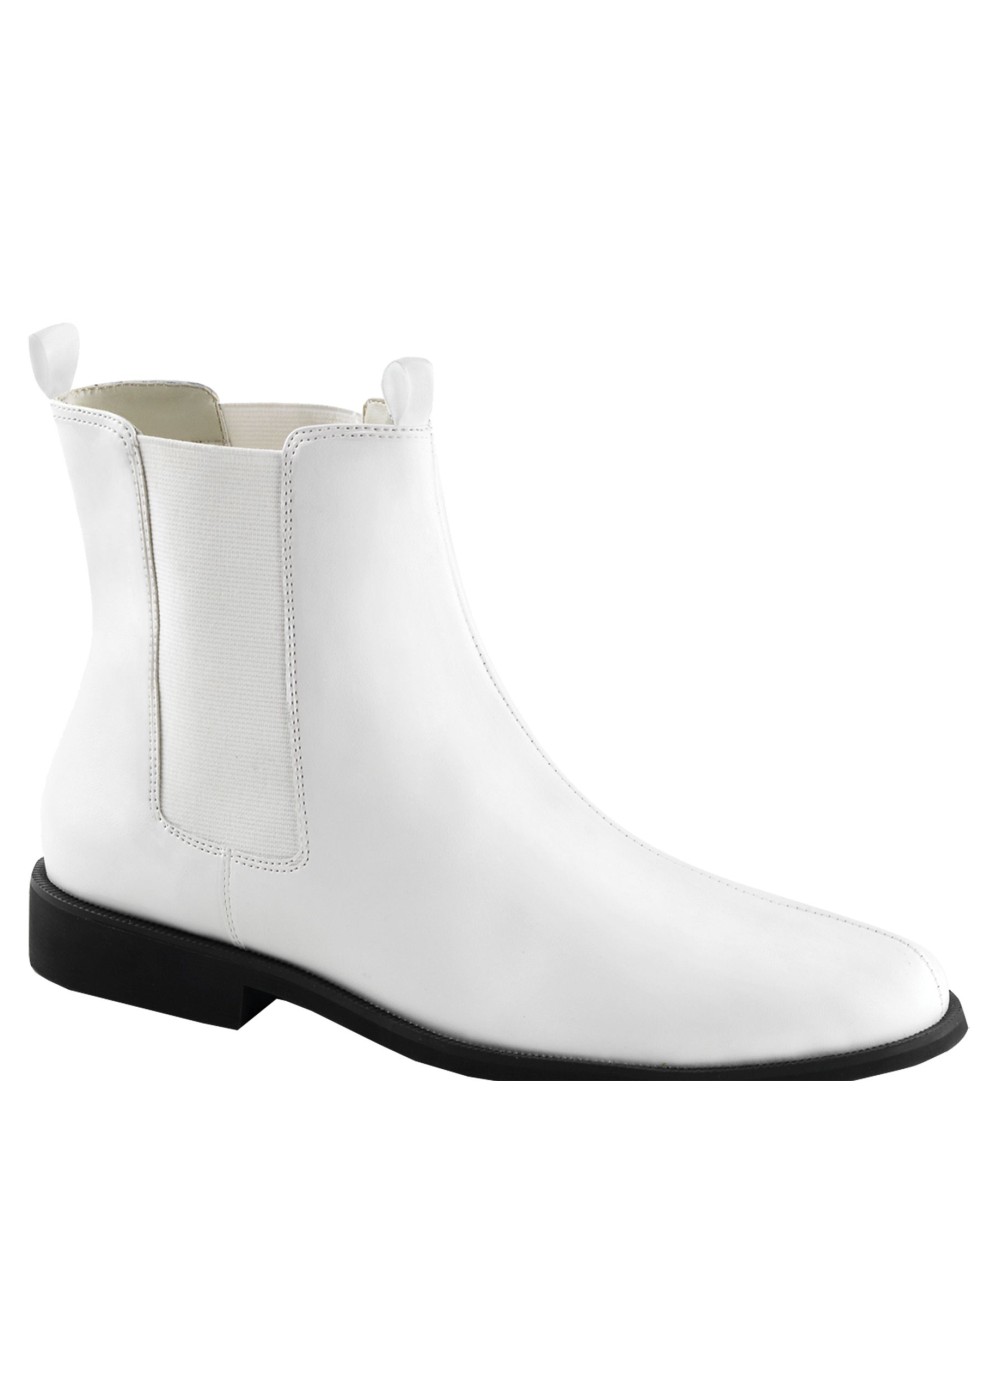 Classic White Cowboy Boots